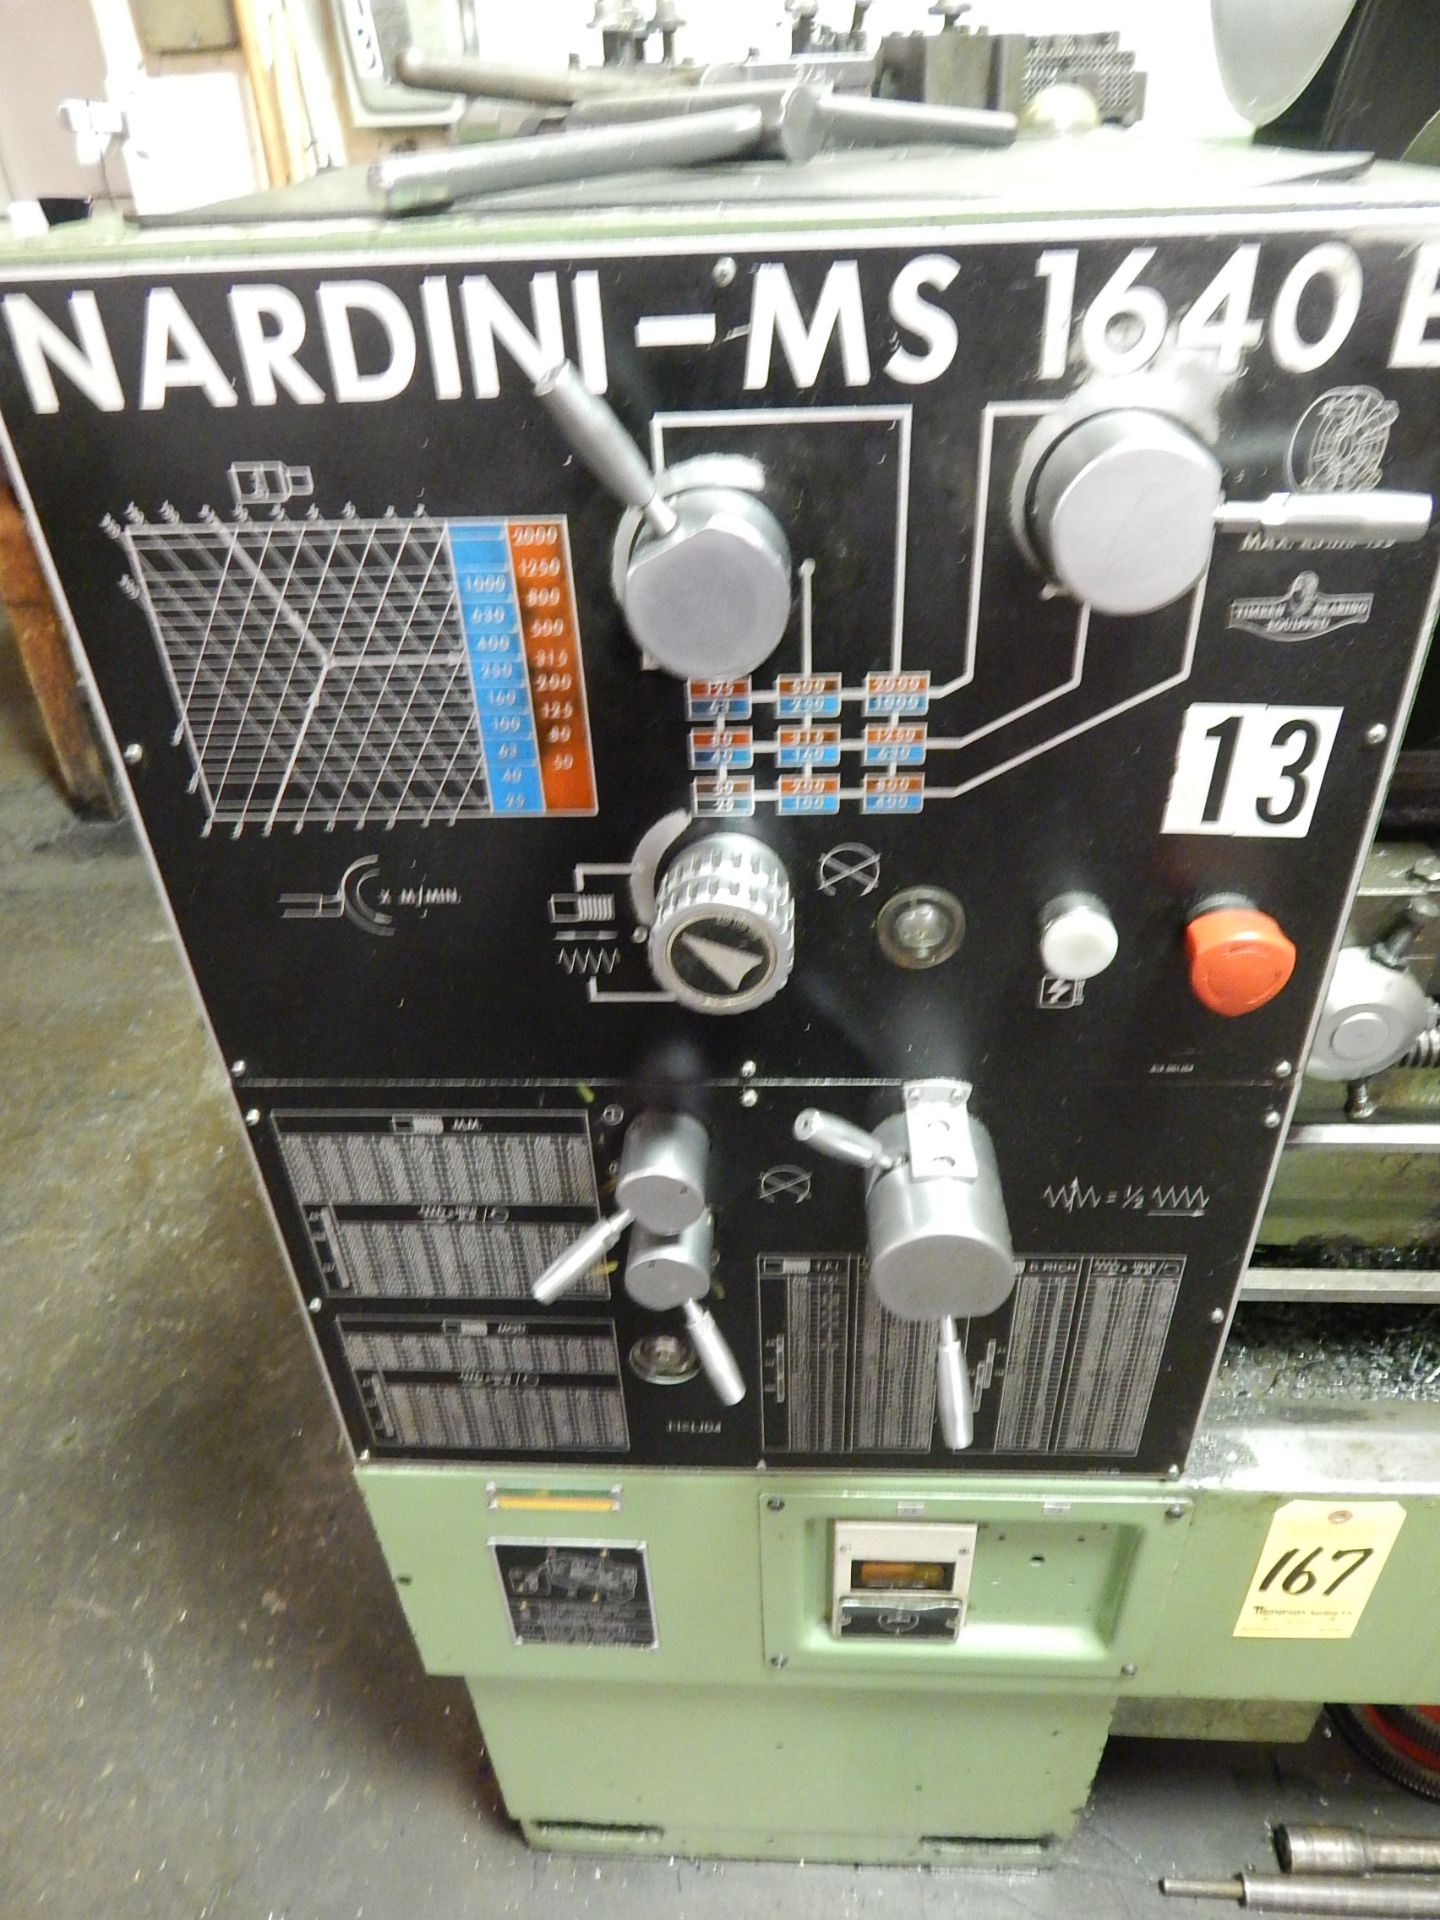 Nardini Mascot MS1640E Toolroom Lathe, s/n 6870-405-535, 16 In. X 40 In., 12 In. 3-Jaw Chuck, Anilam - Image 8 of 11